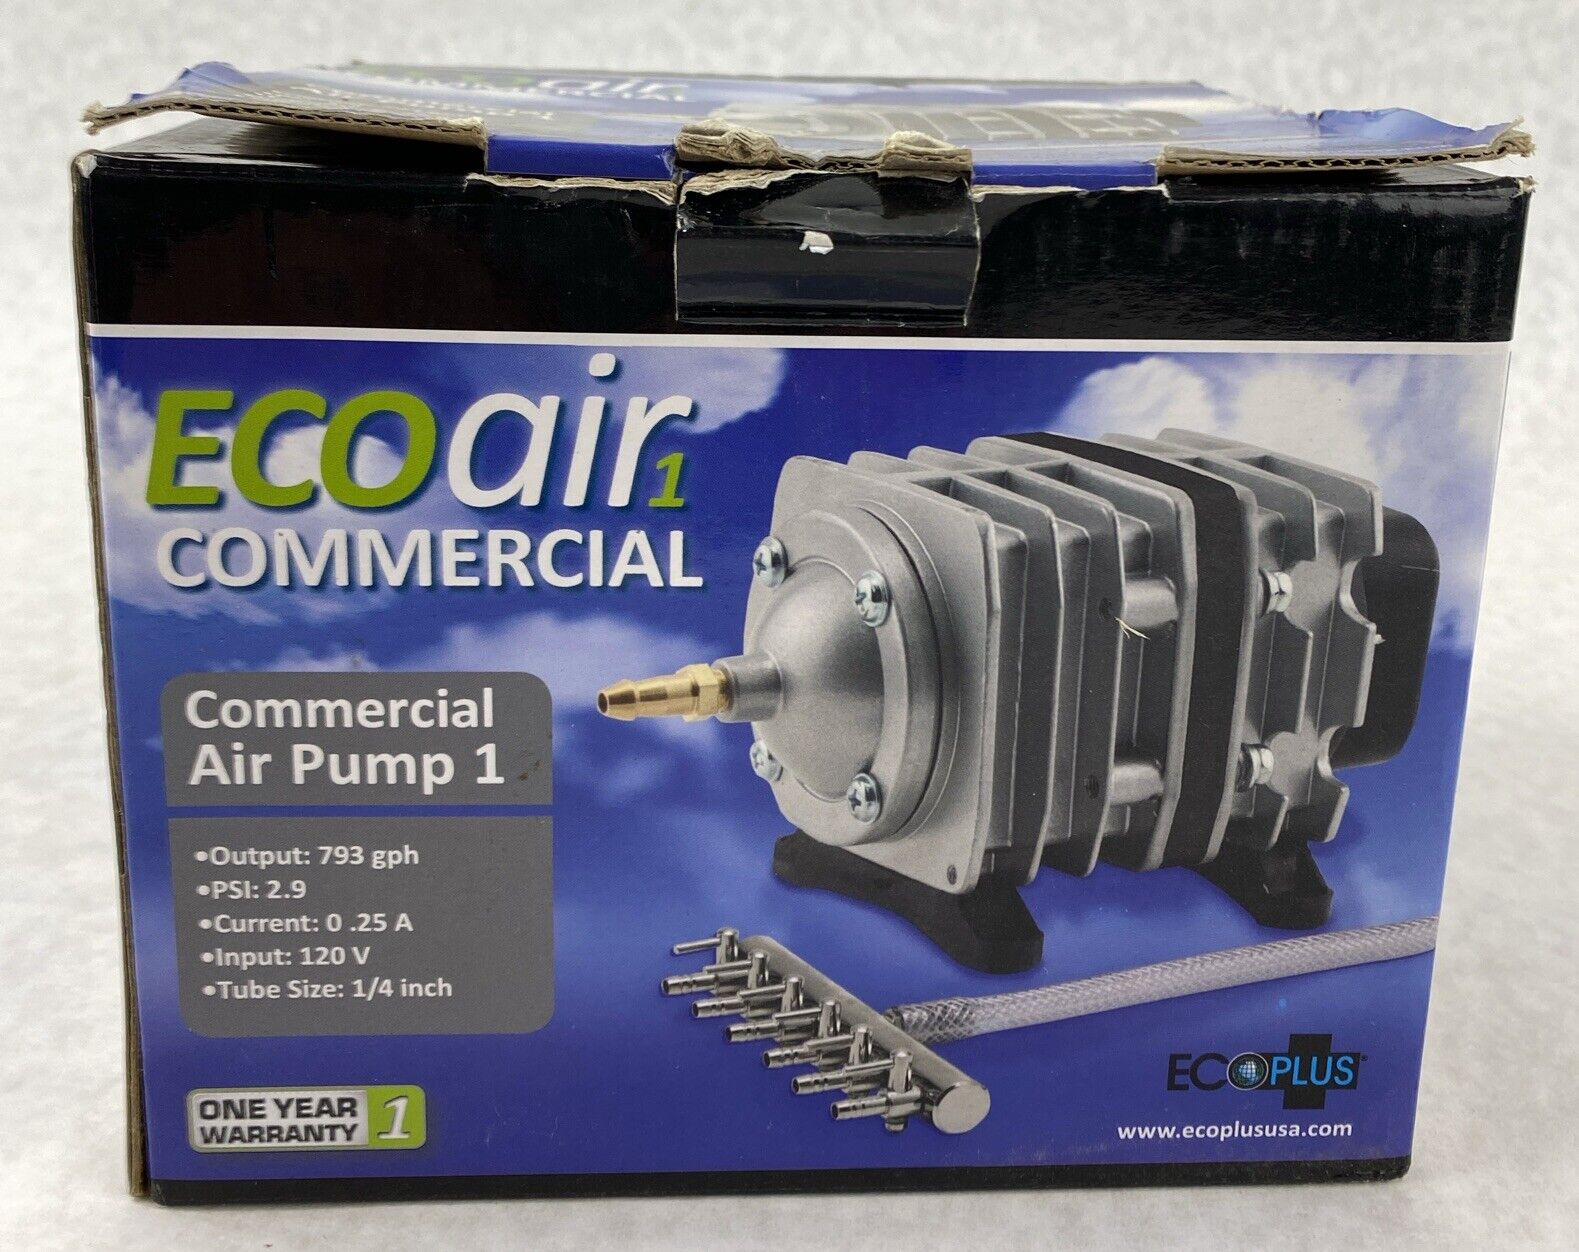 Ecoplus EcoAir 1 Commercial Air Pump 793 GPH 2.9psi 120V 0.25A 1/4" Tube